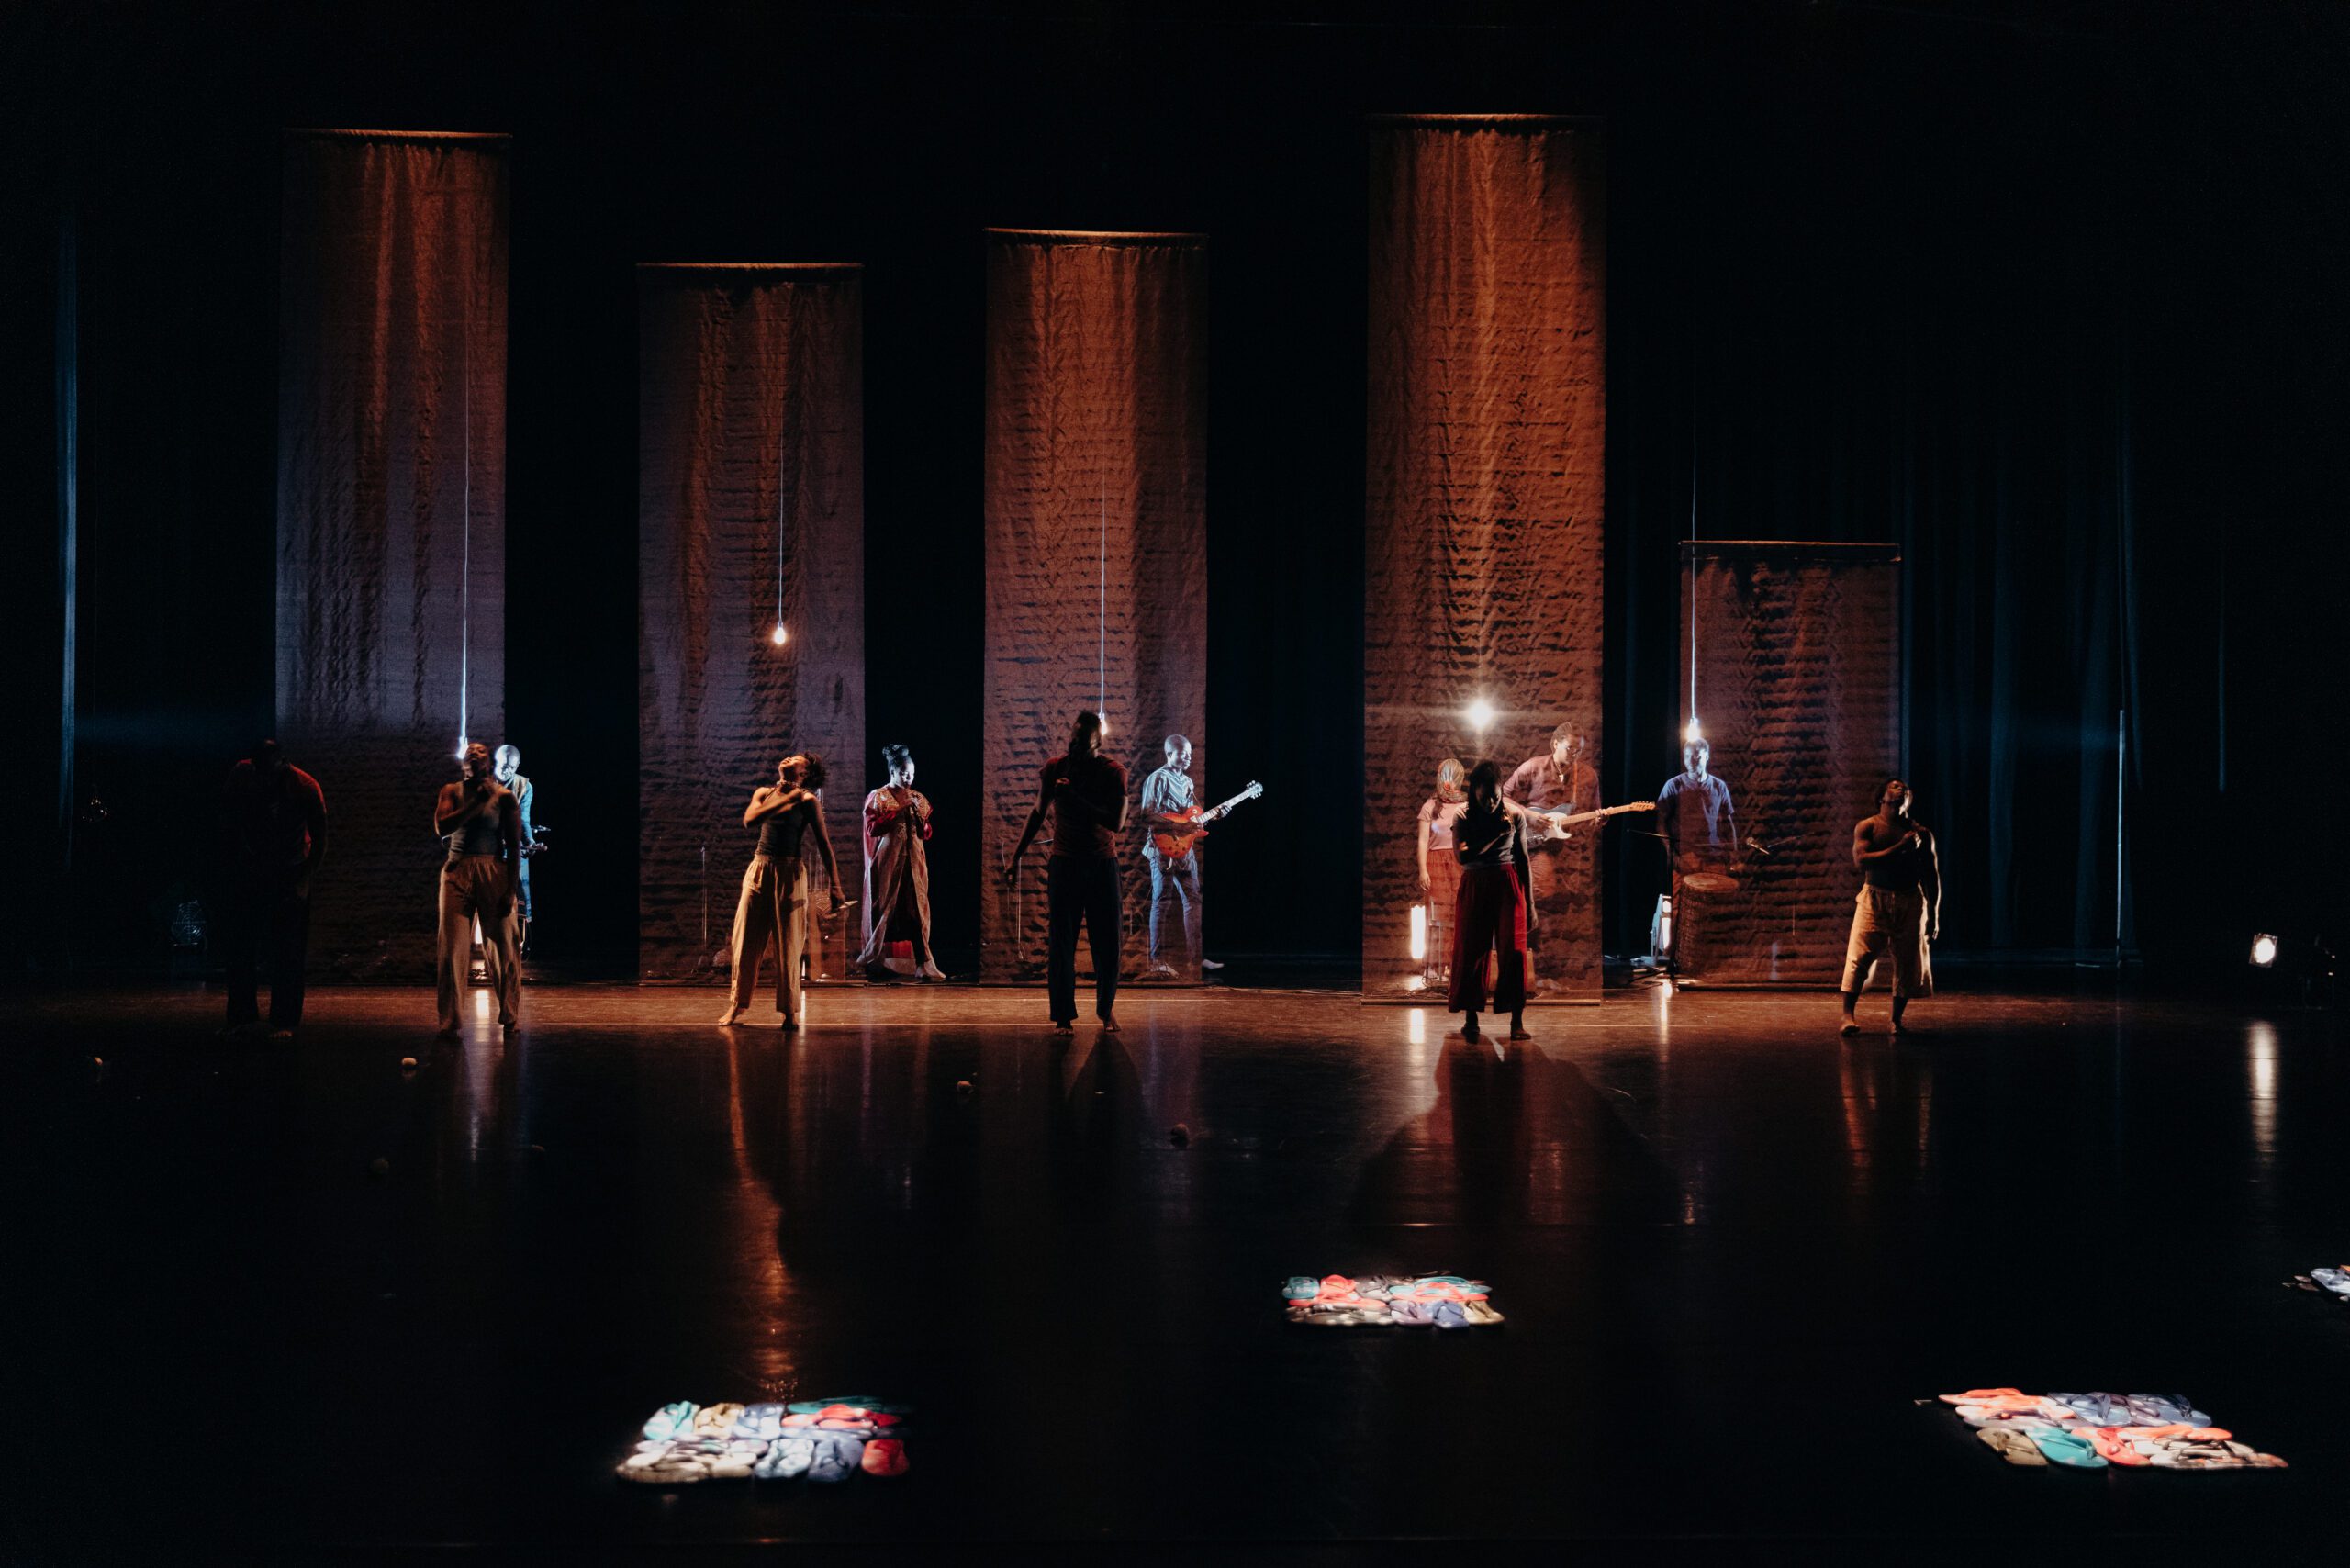 Group of people dancing in a dark room with spotlights